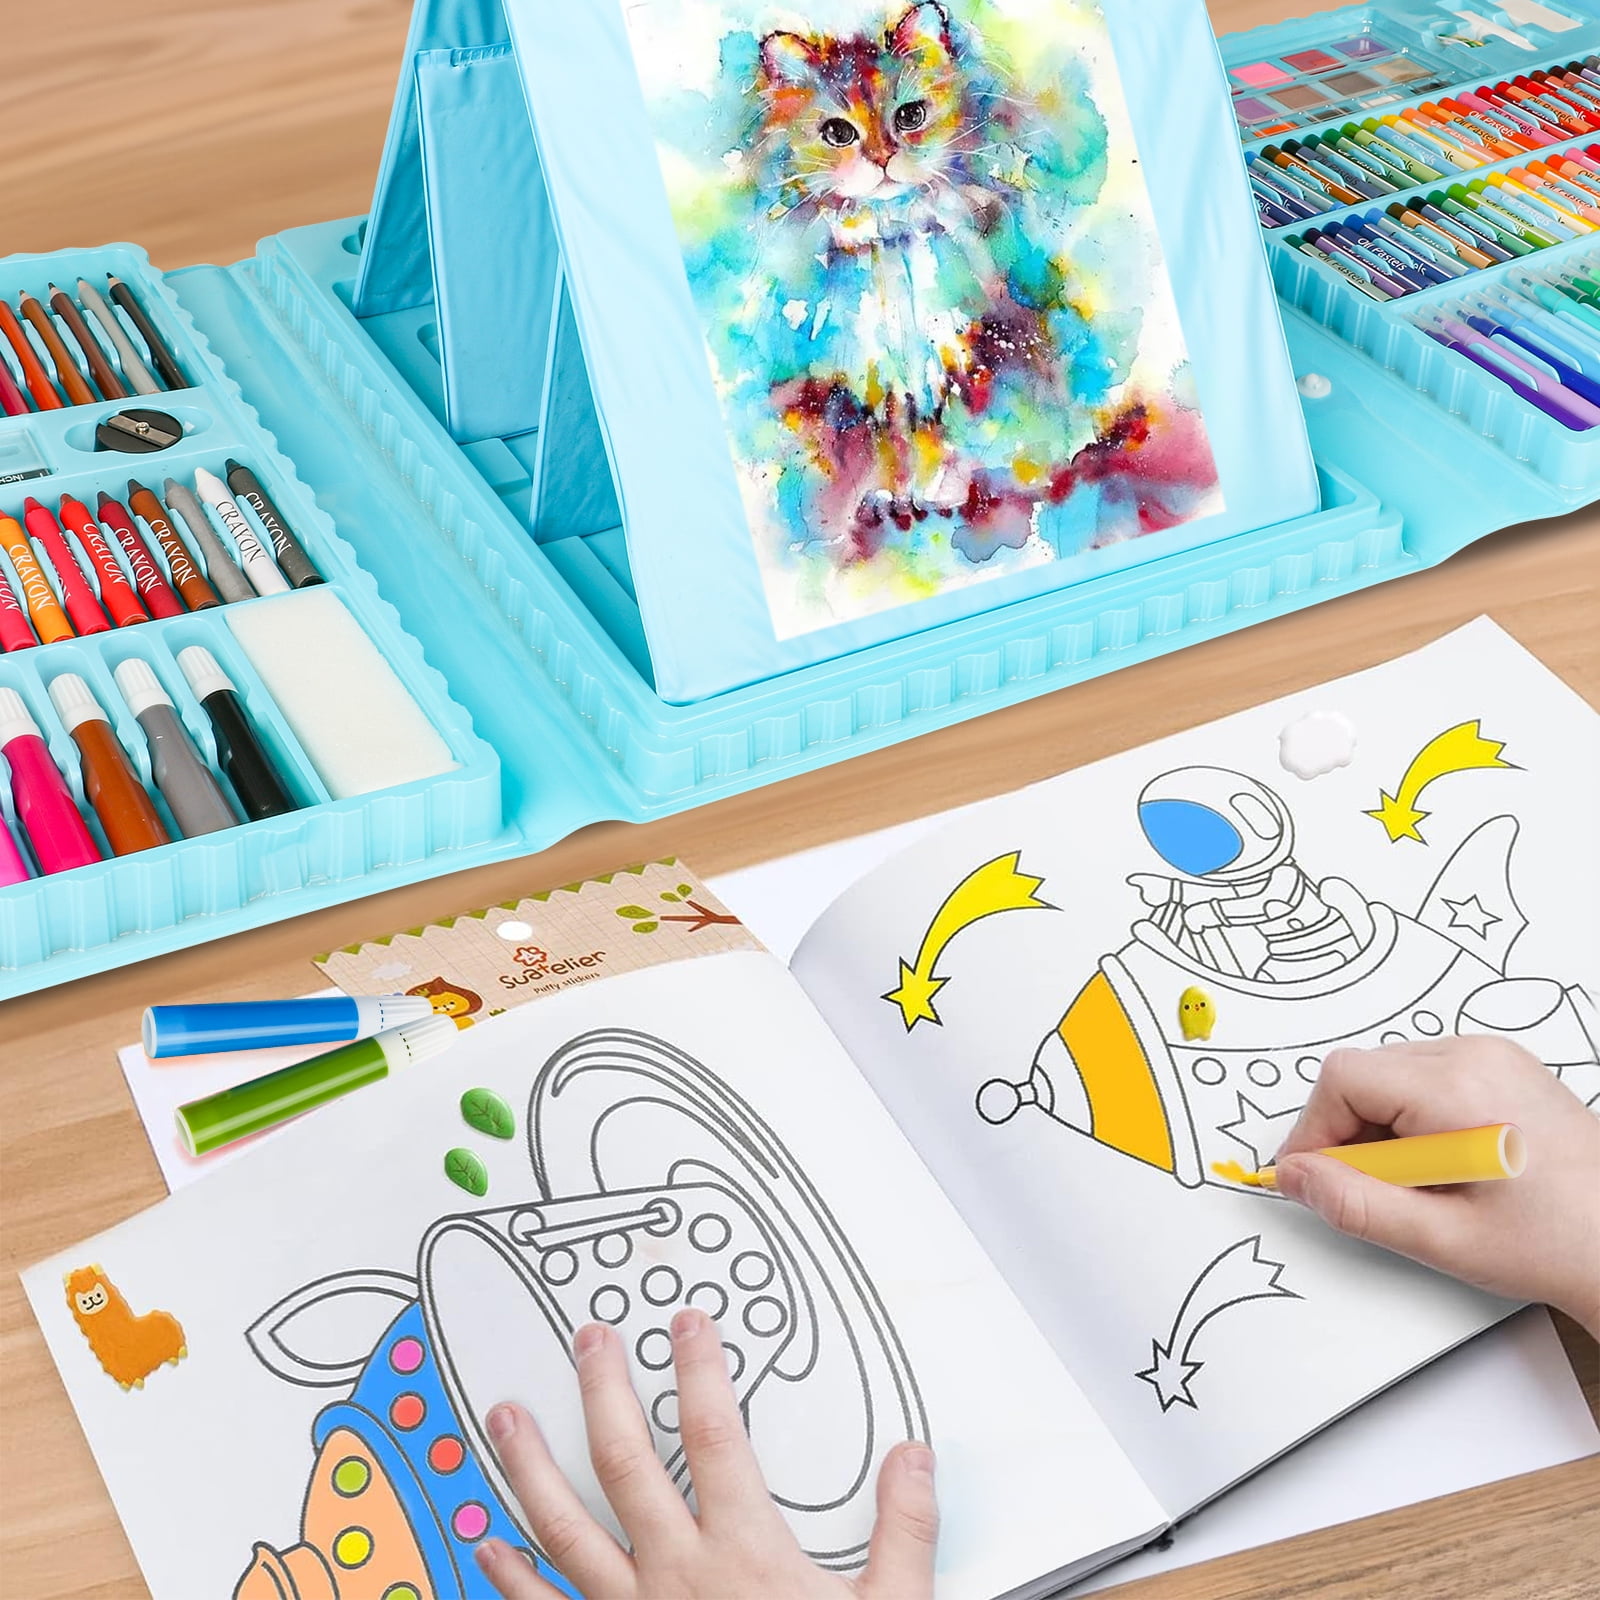 Hot Bee 208 Pcs Kids Art Set, Blue Color Set for Boys&Girls, School Art  Supplies Drawing Kit for kids 4-6, Arts & Crafts - School Art Beginners  Ideal